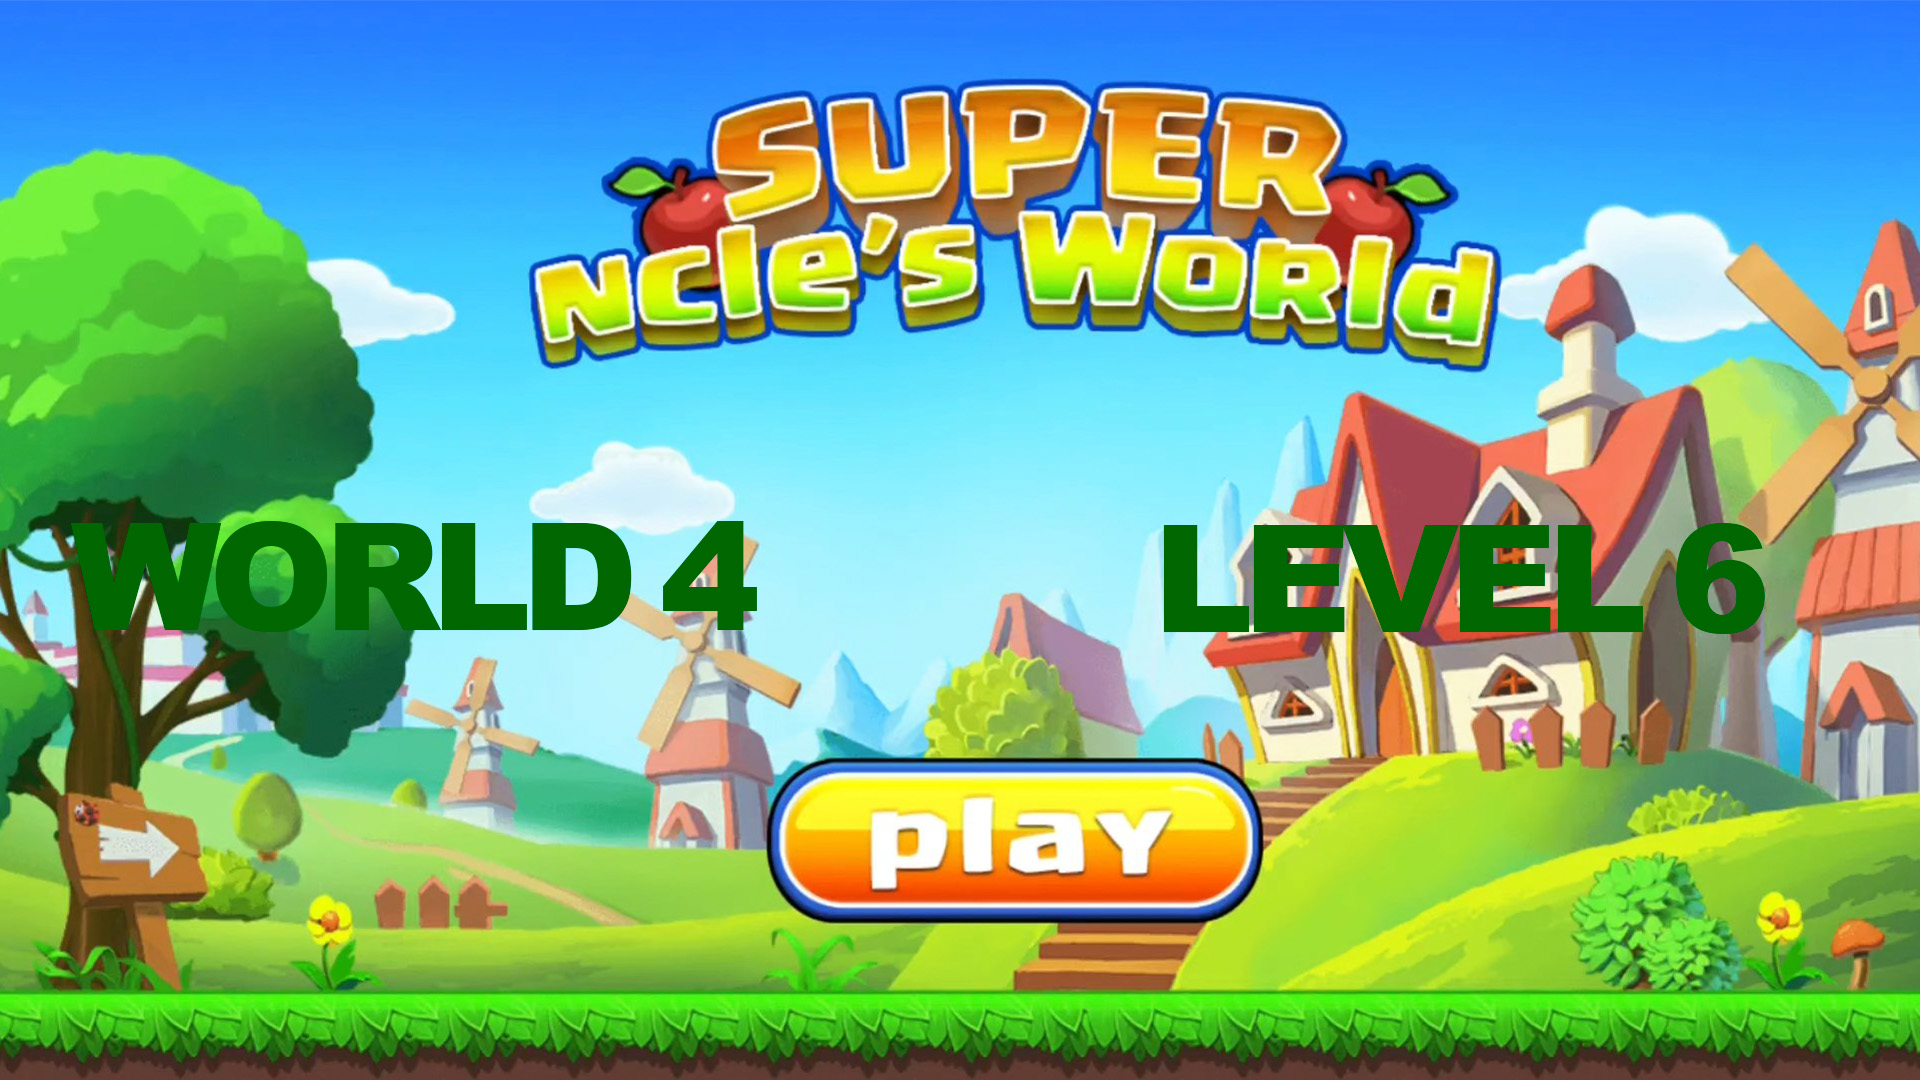 Super ncle's  World 4. Level 6.